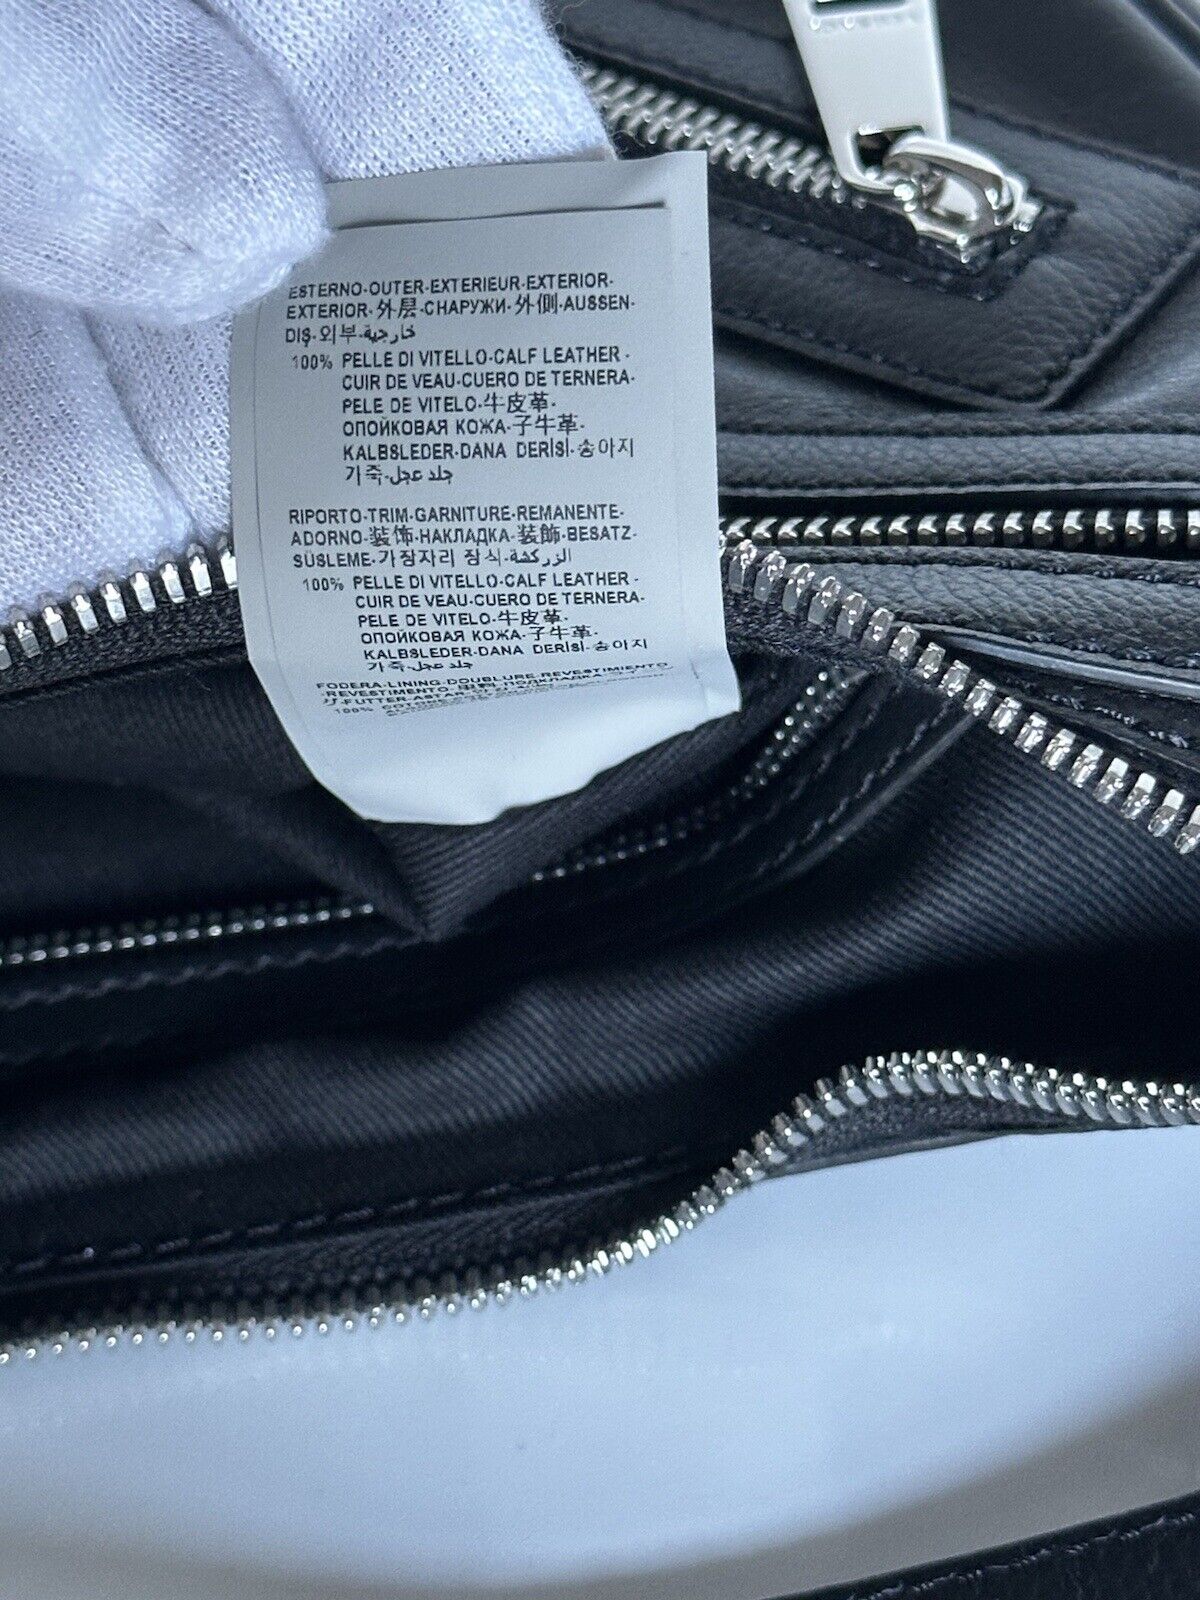 NWT $1925 Versace Silver Medusa Head Calf Leather Small Black Hobo Bag 1007680